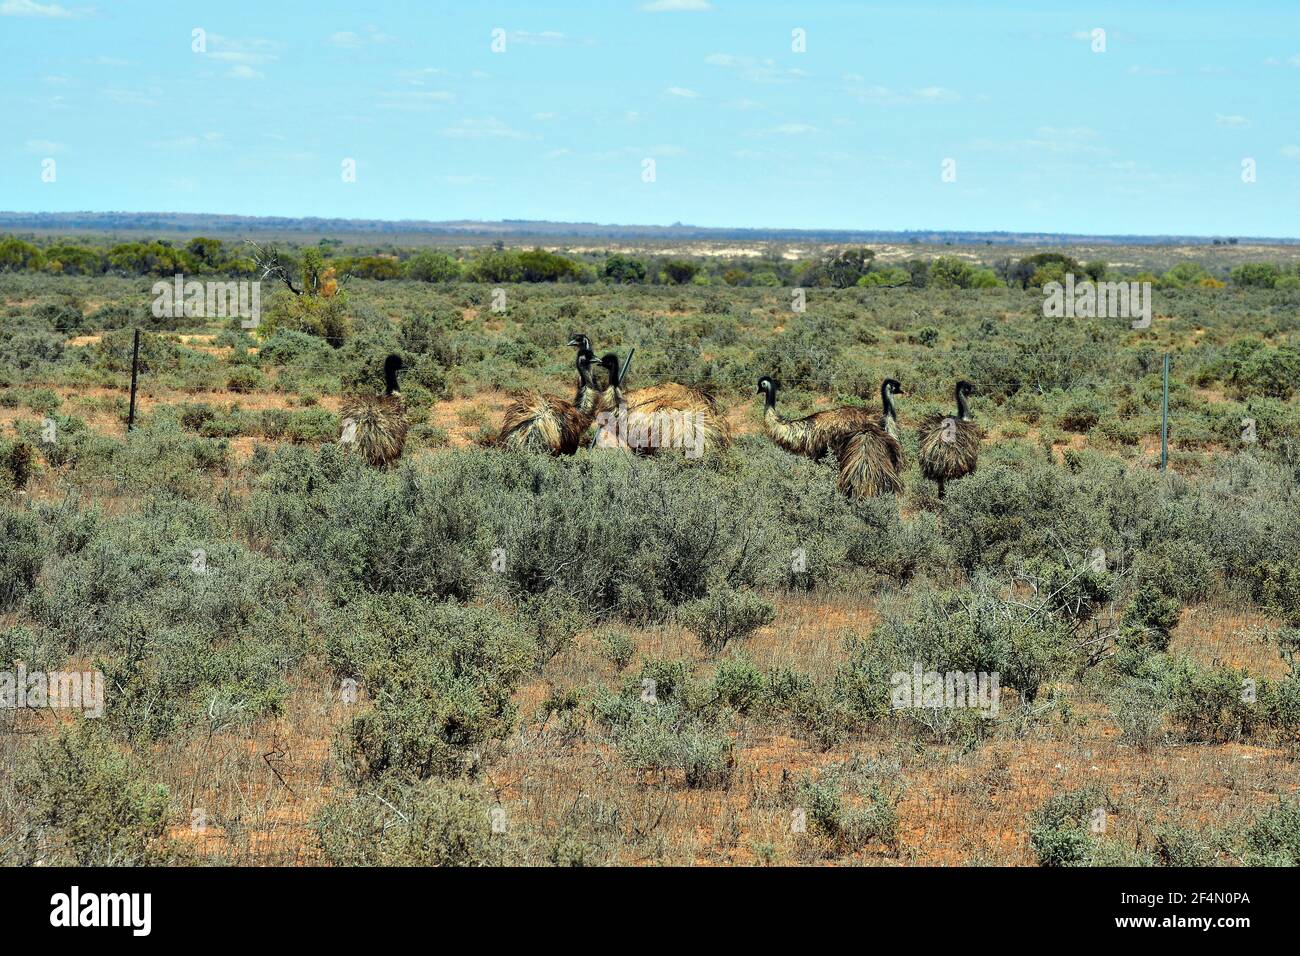 Australia, group of Emu birds in Australians outback Stock Photo